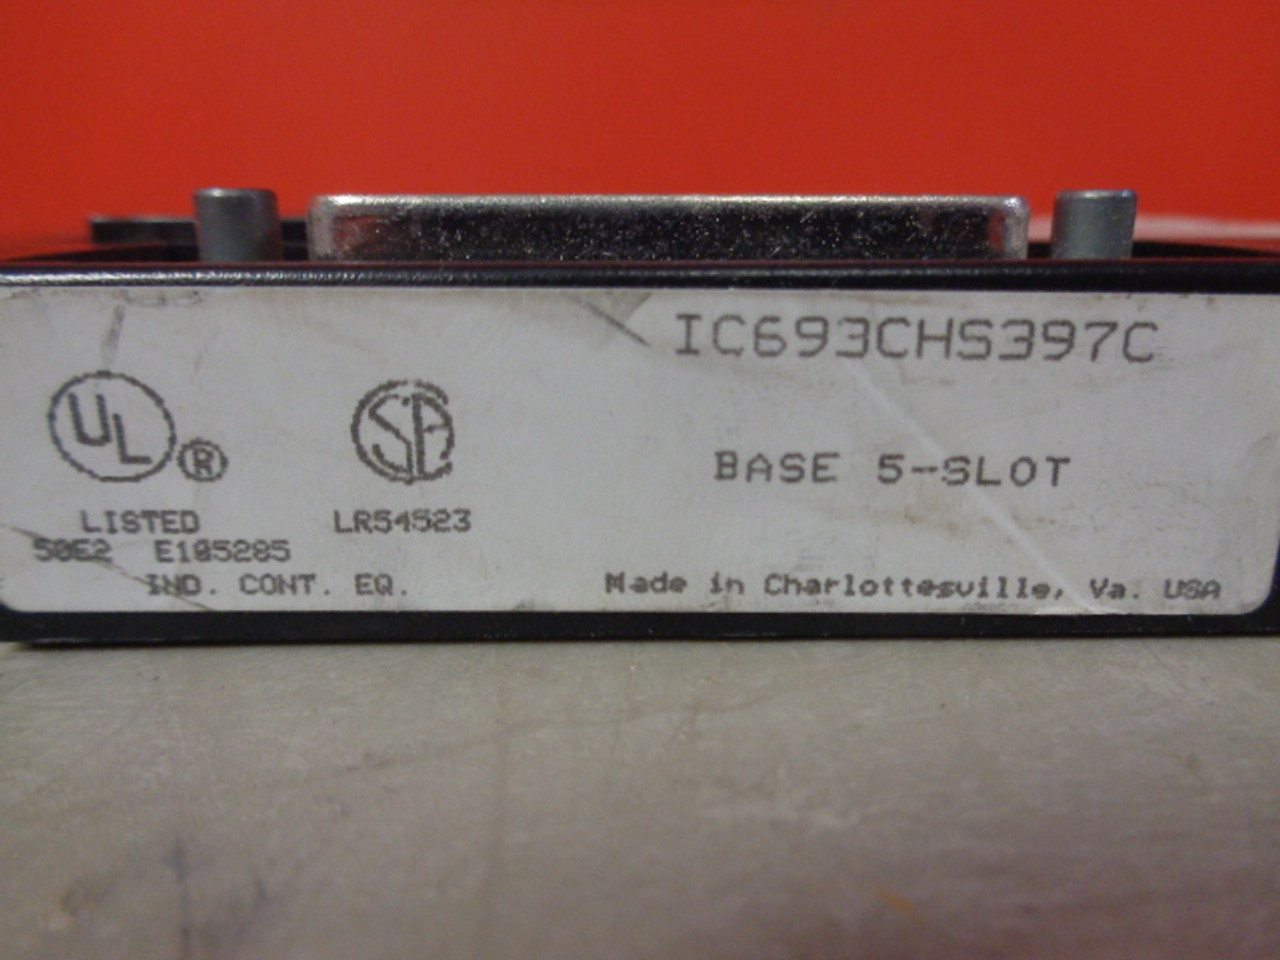 GE IC693CHS397C Base, 5-Slot